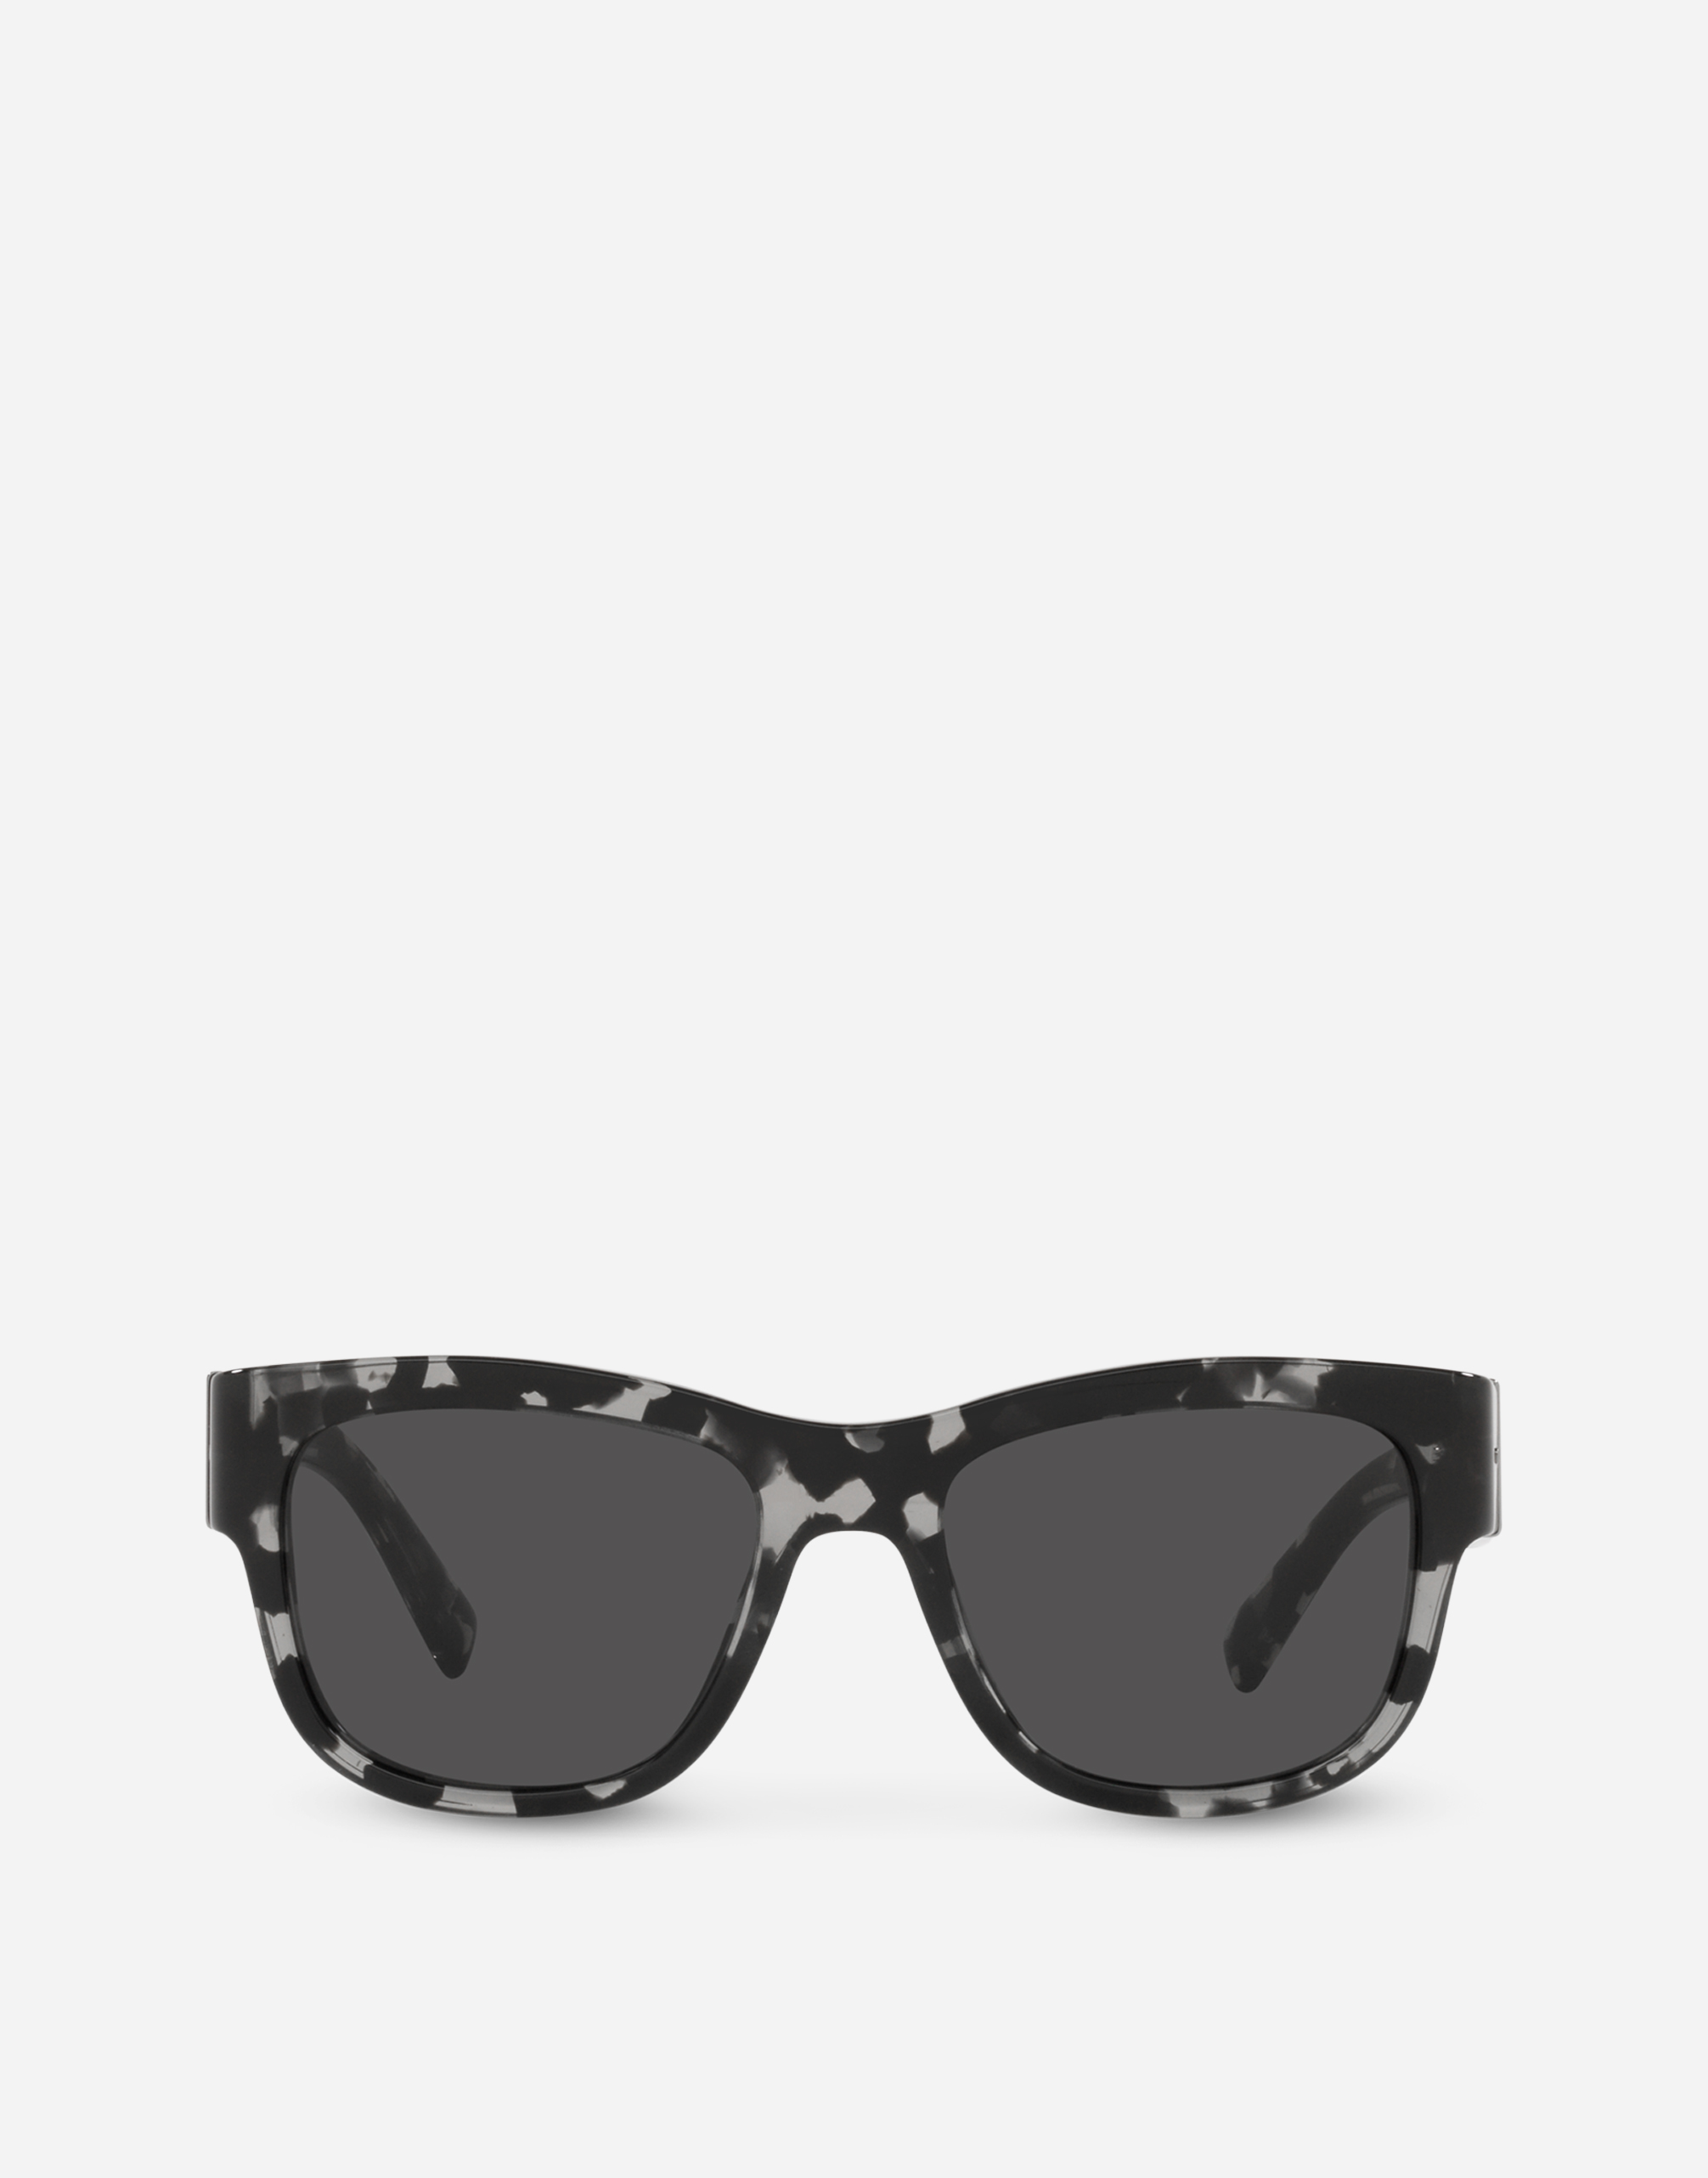 Gros grain sunglasses in Grey havana